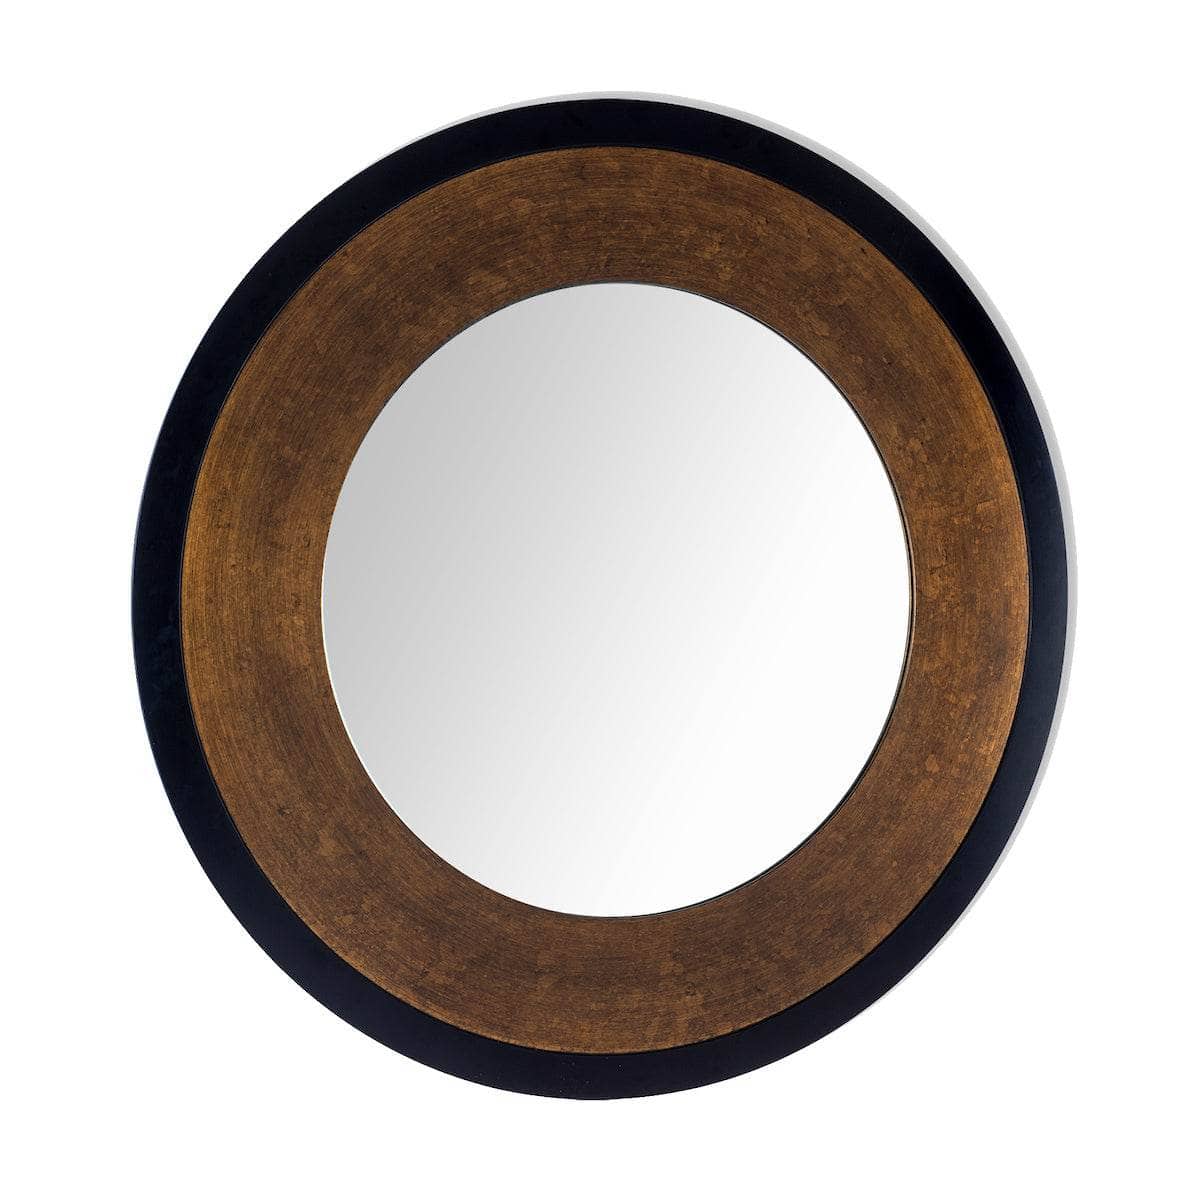 Mirrors  -  Laura Ashley Cara Round Mottled Bronze Mirror  -  60006282